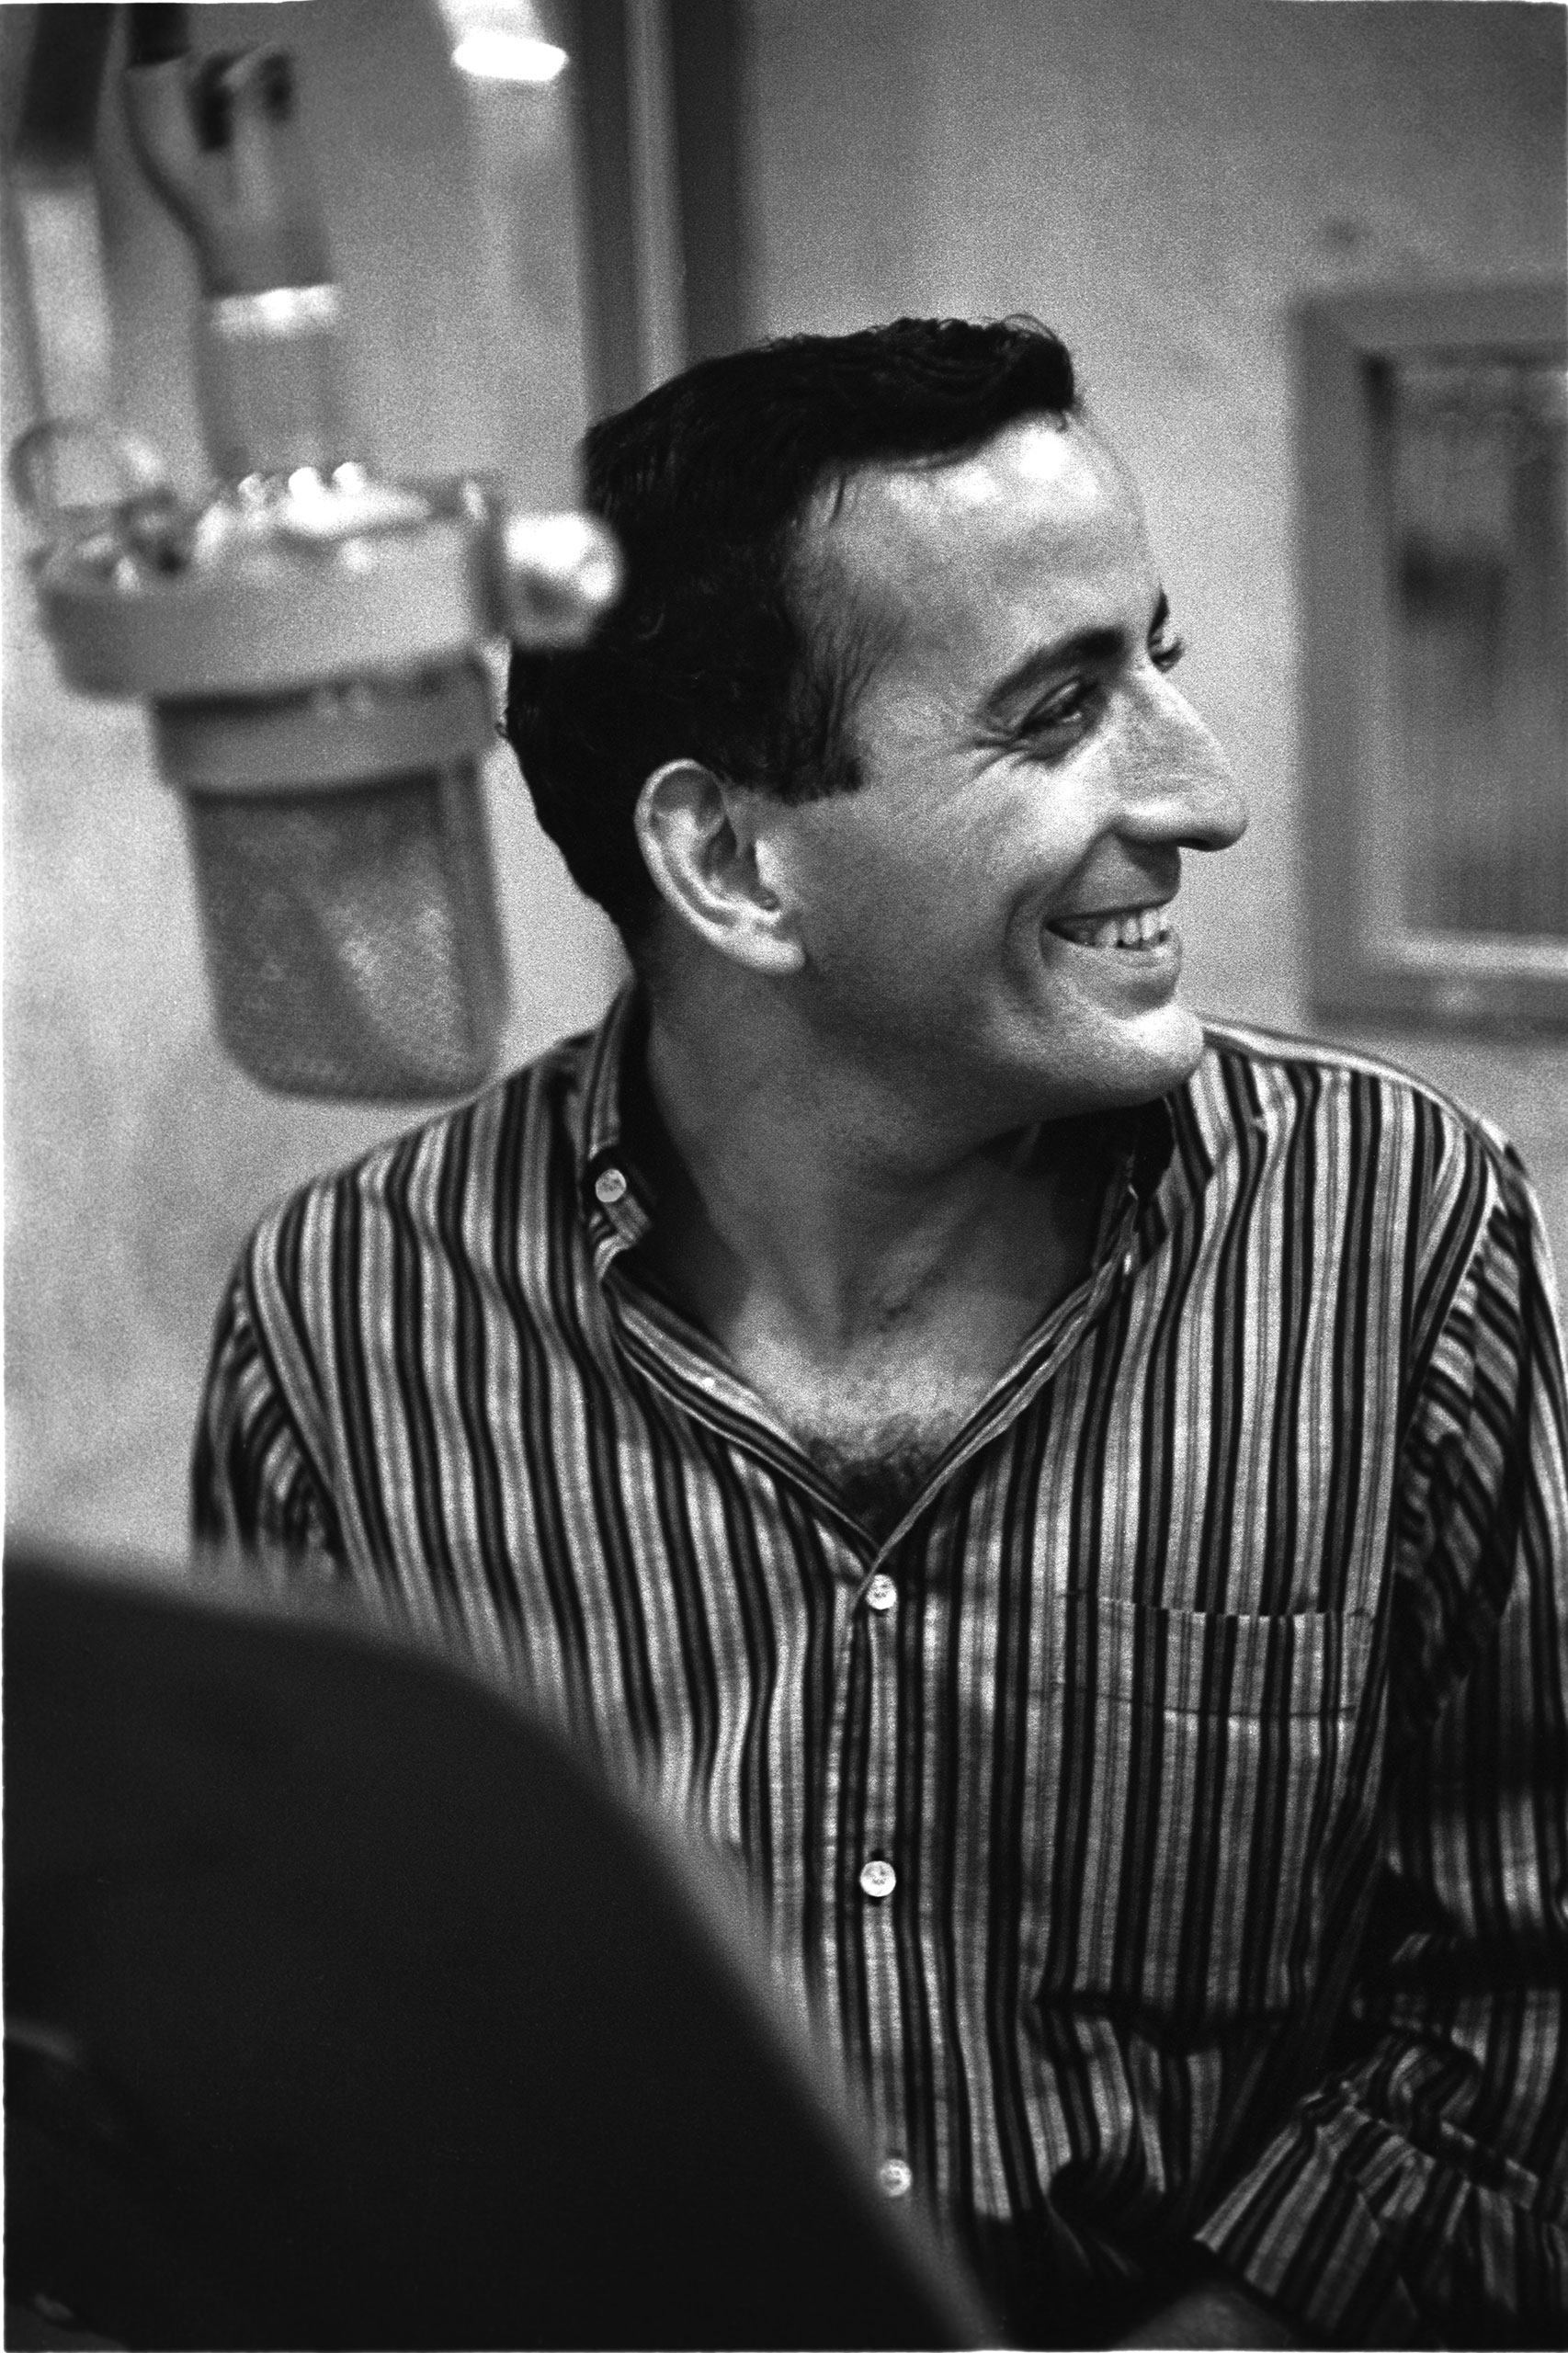 Tony Bennett in recording studio wearing long sleeved button down striped shirt. June 1957.